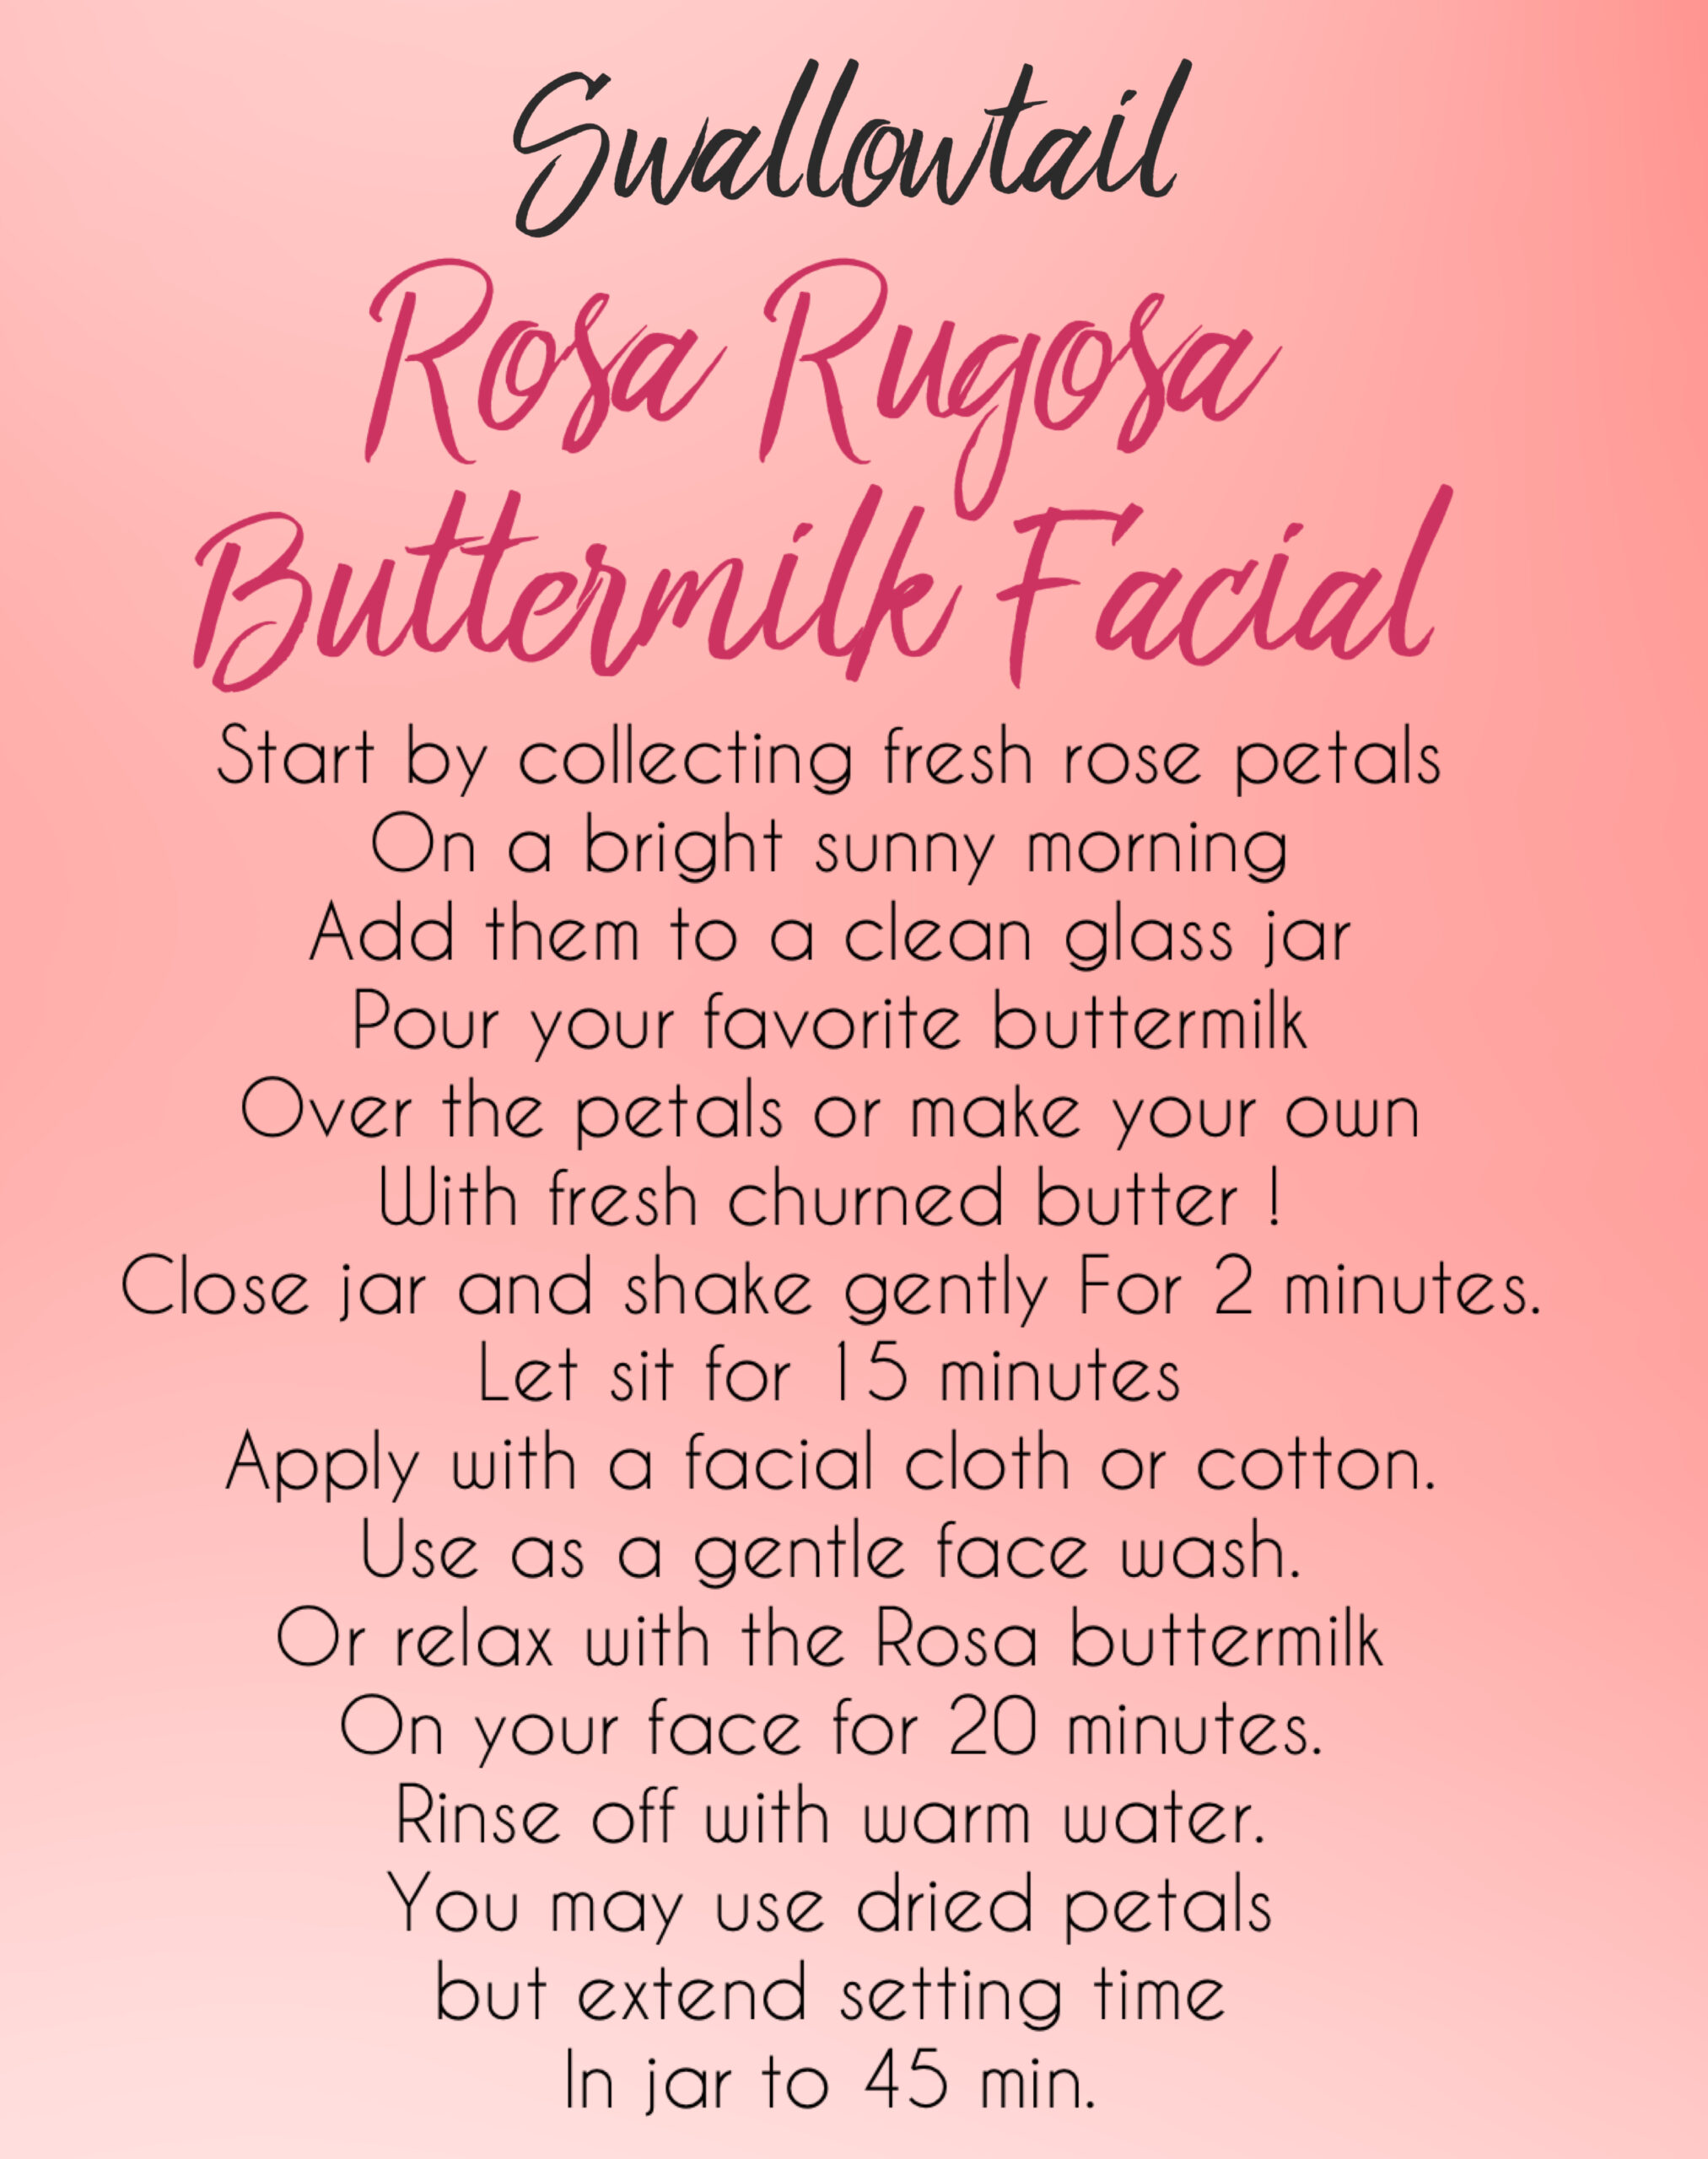 Recipe for Rosa Rugosa Buttermilk Facial from Swallowtail Farm.